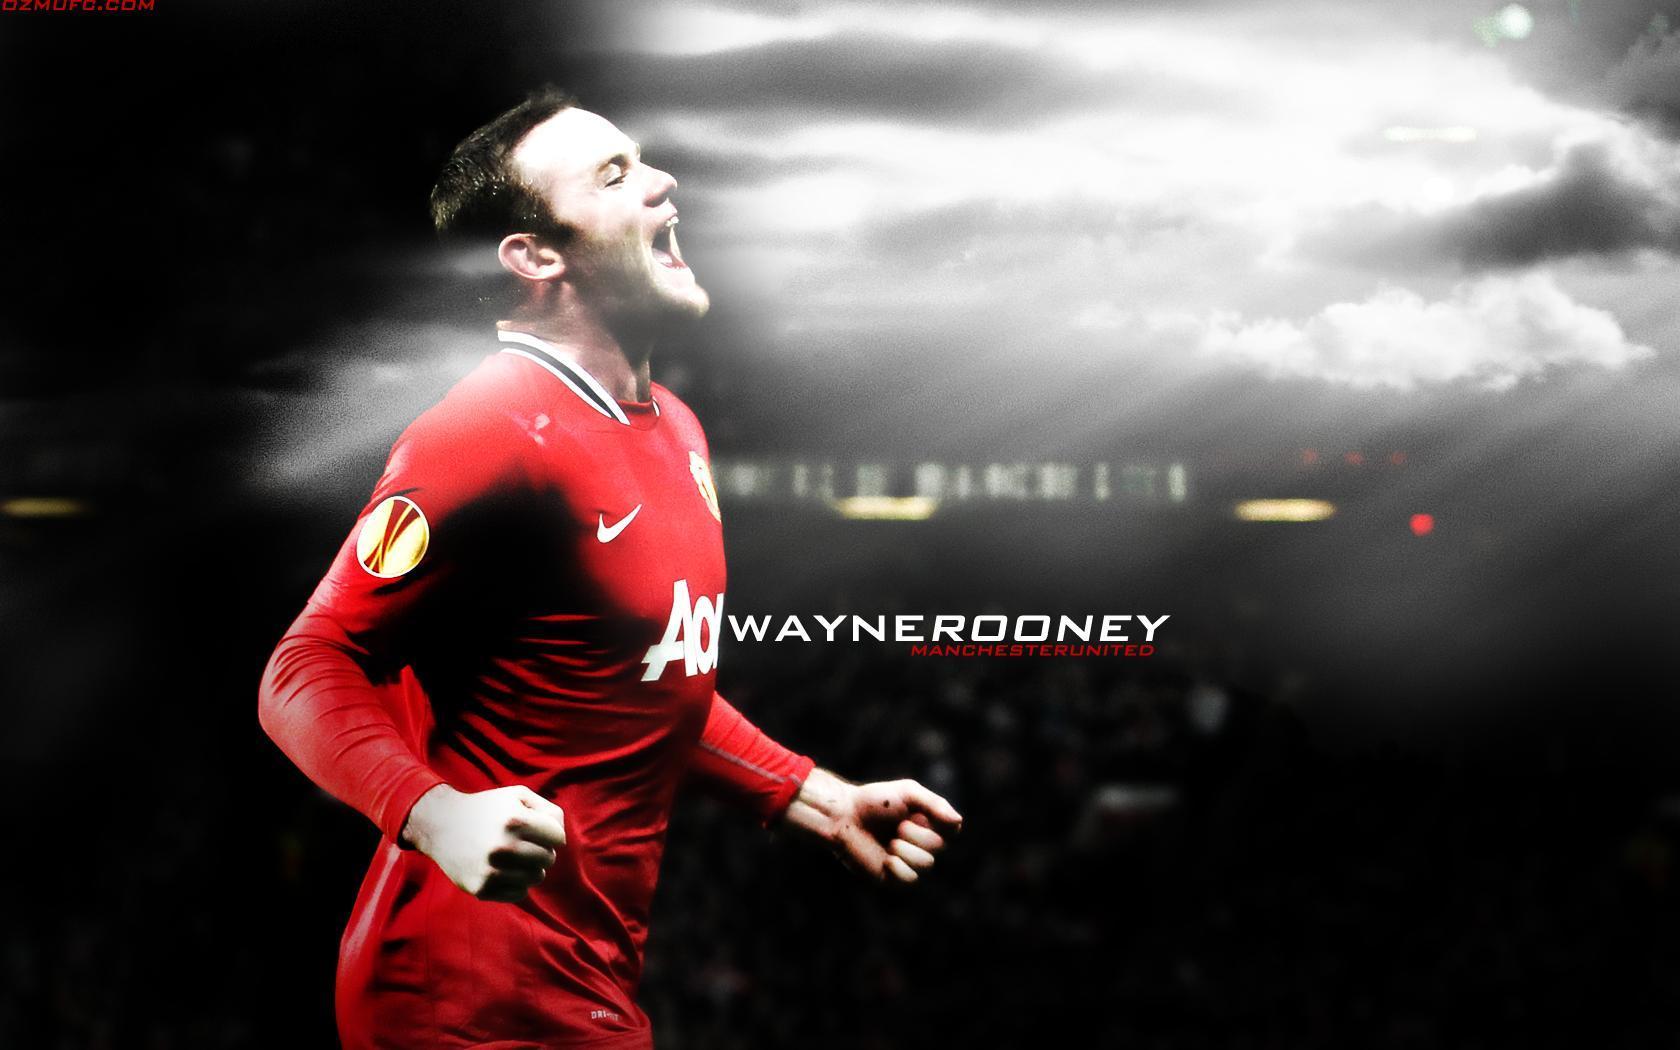 Wayne Rooney New HD Wallpaper and Latest Photo GalleryHD